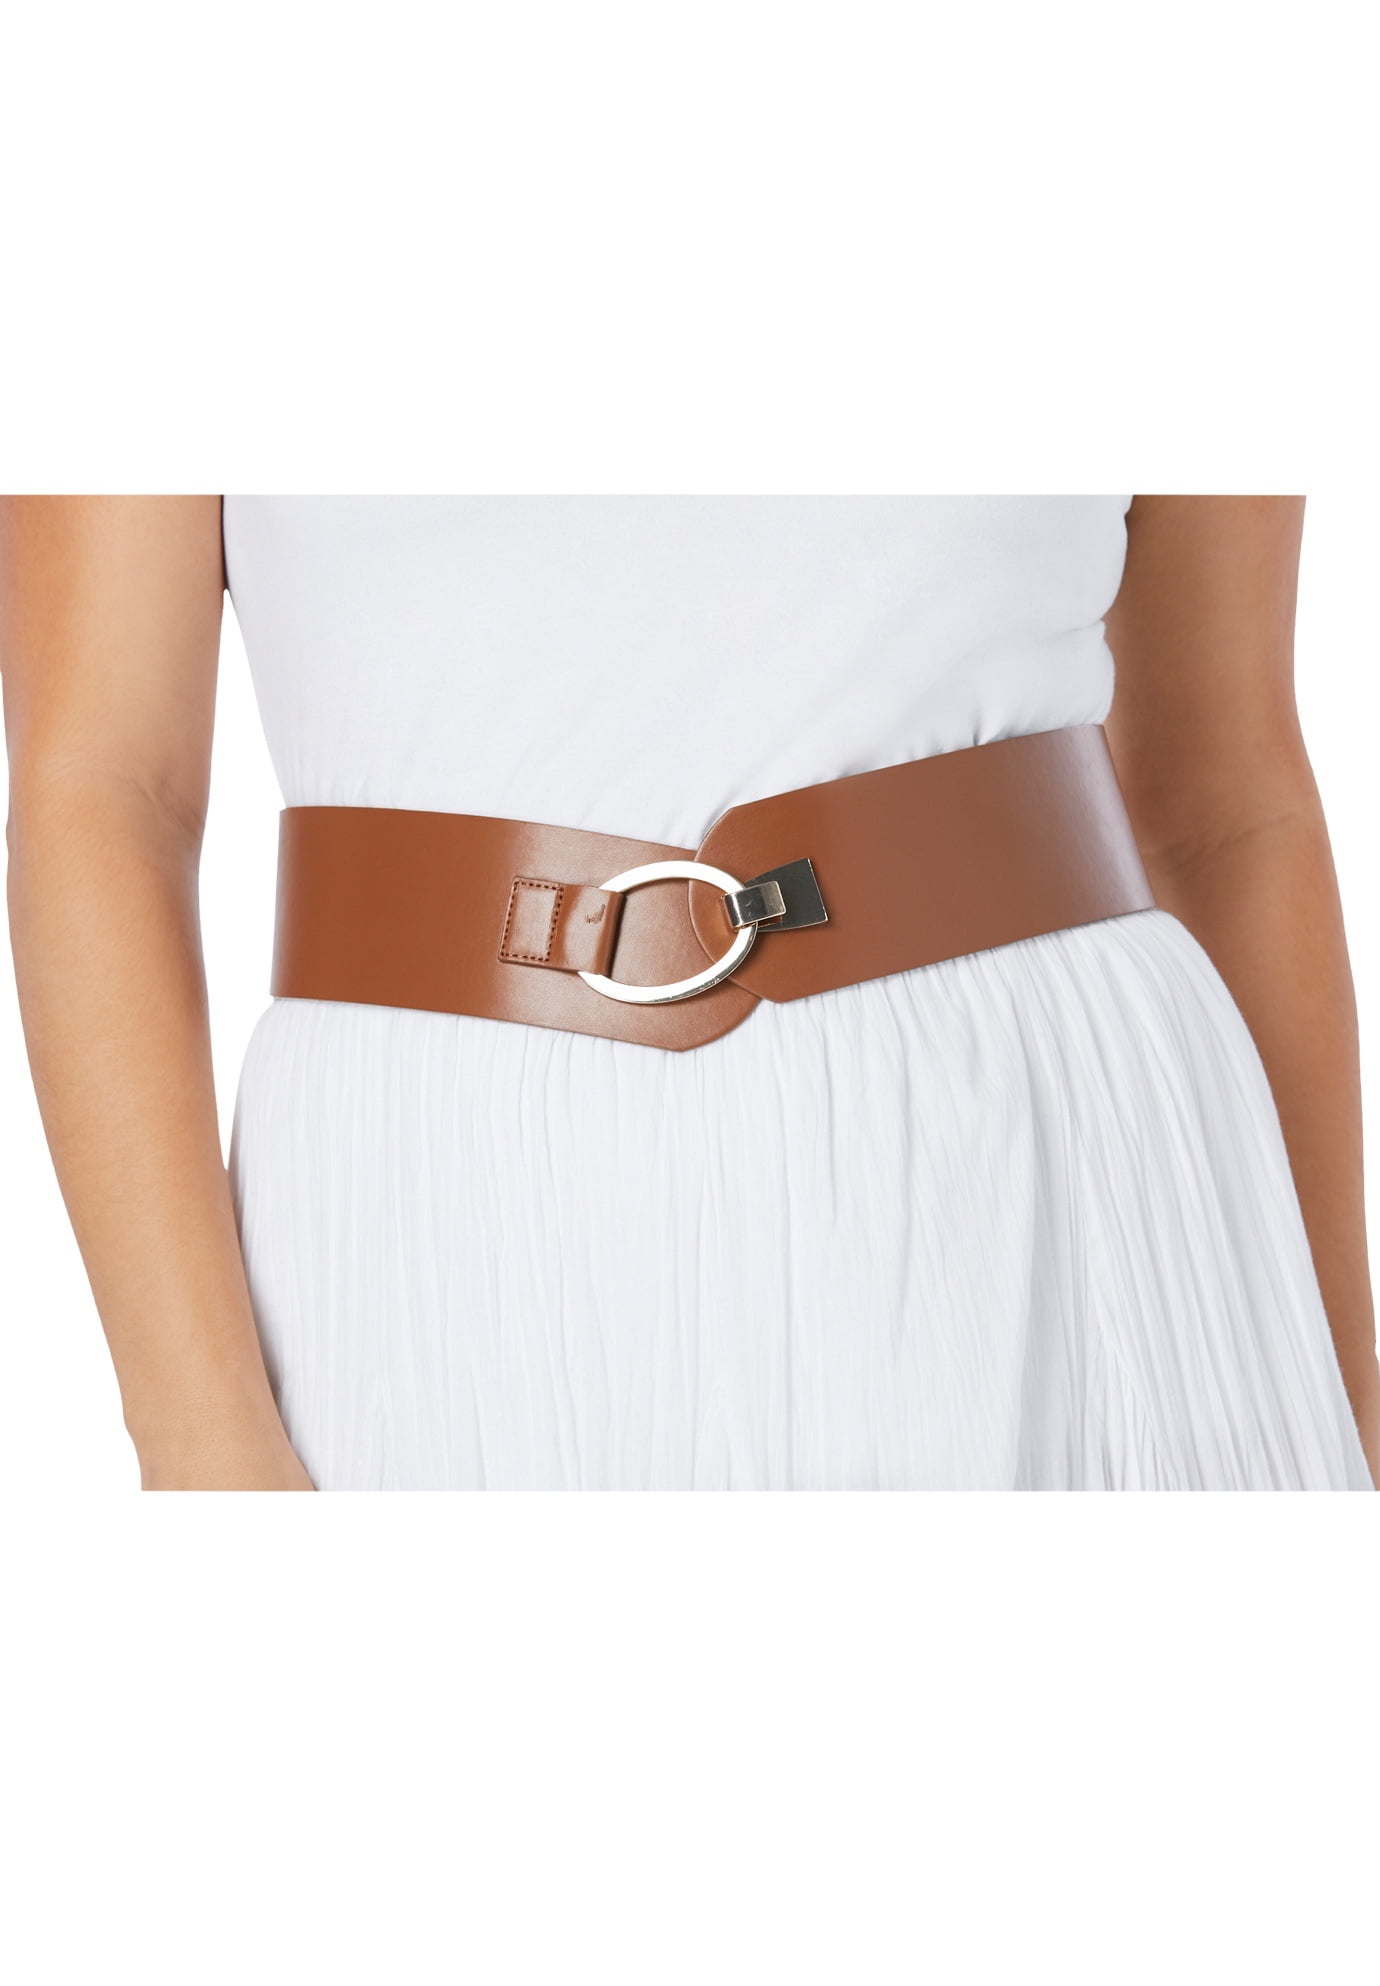 Womens Plus Size Belts Ladies Faux Leather Criss Cross Buckle Waist Accessories 